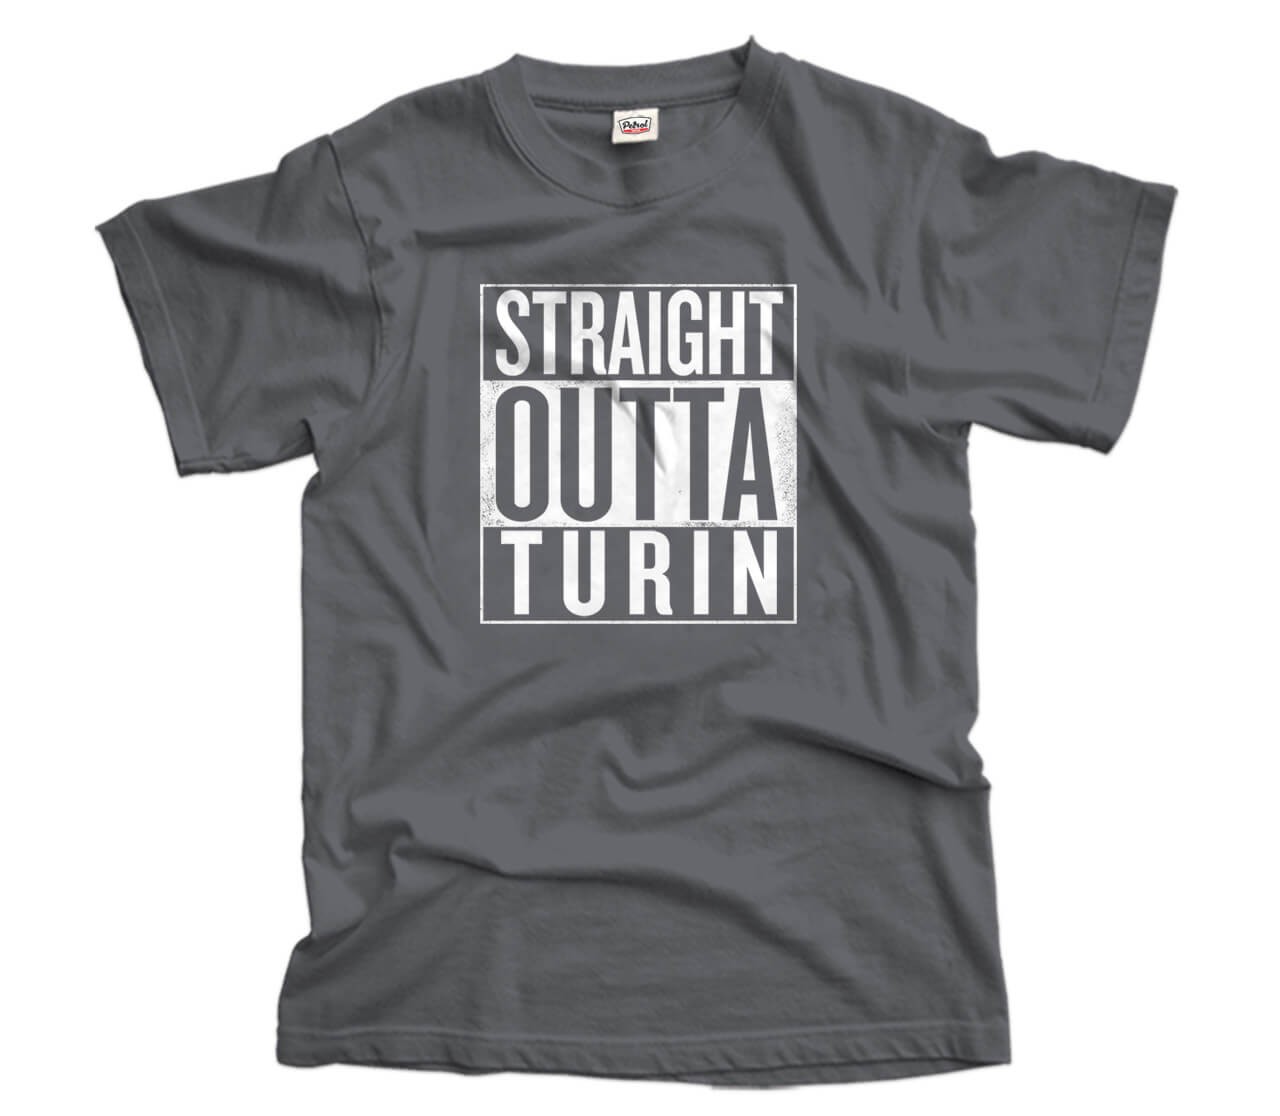 Straight Outta Turin T-Shirt